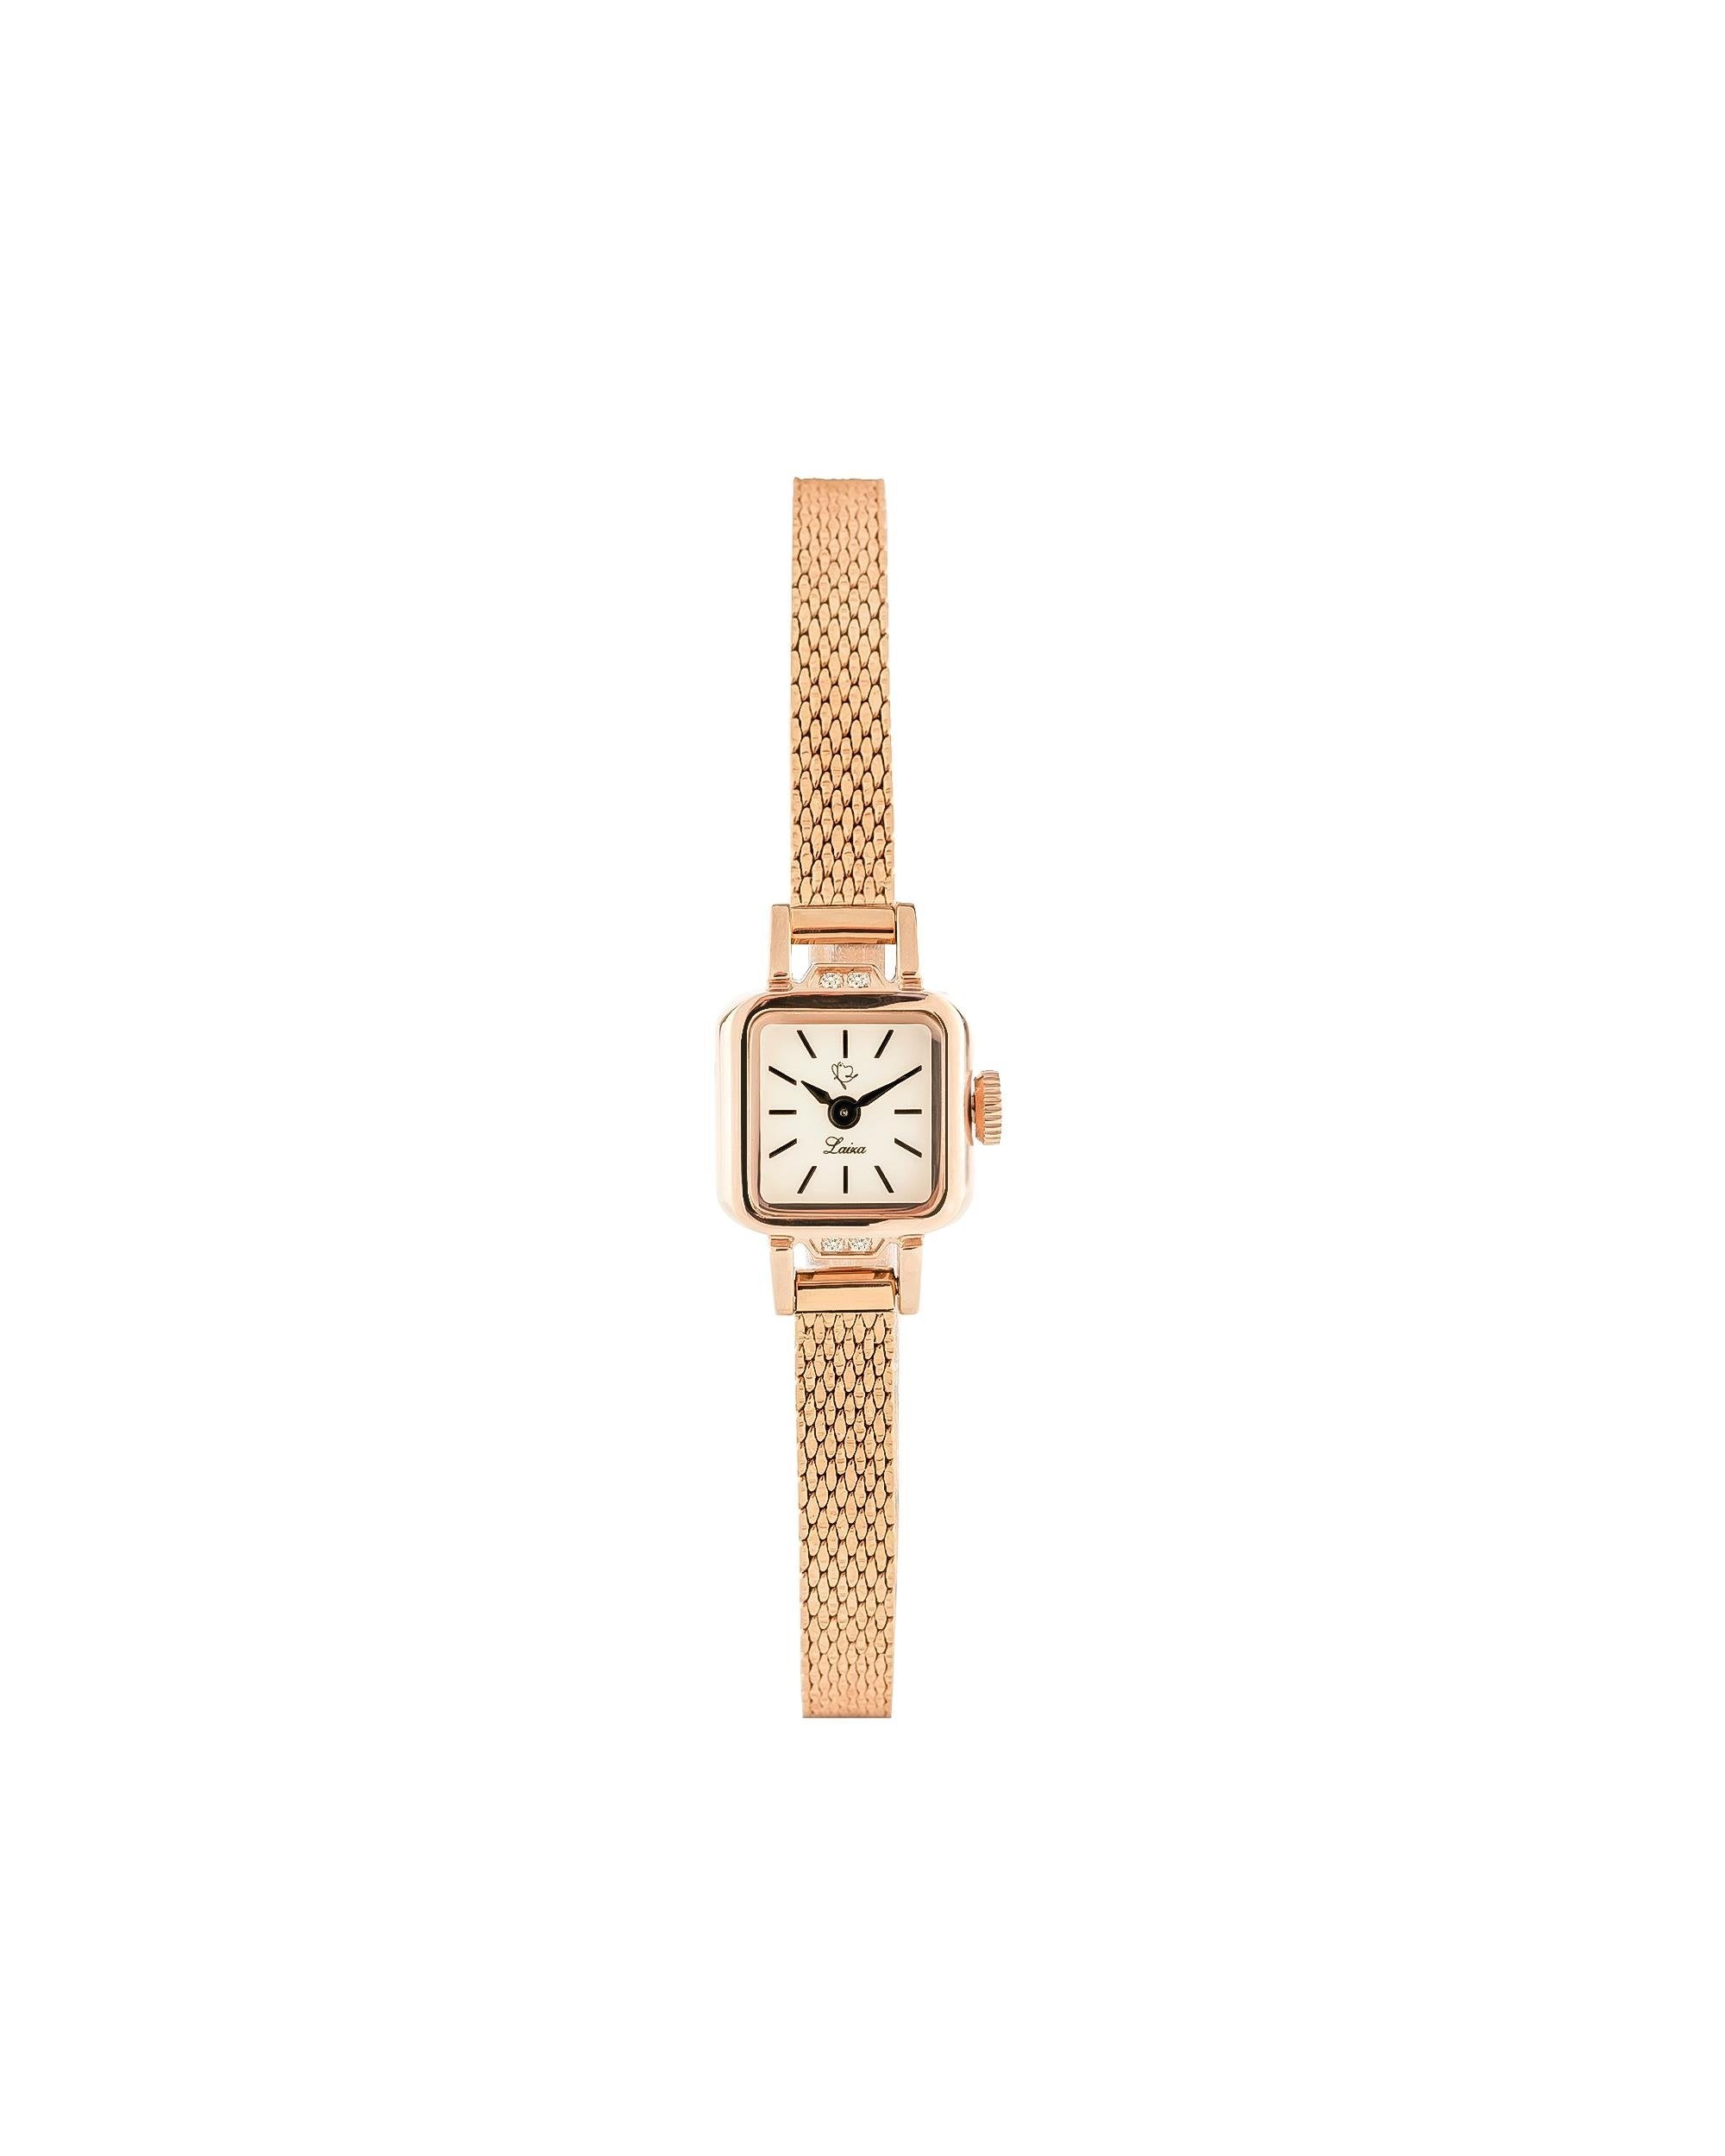 Laiza Contes 1968 Women's Wristwatch LAI-1-1968-02